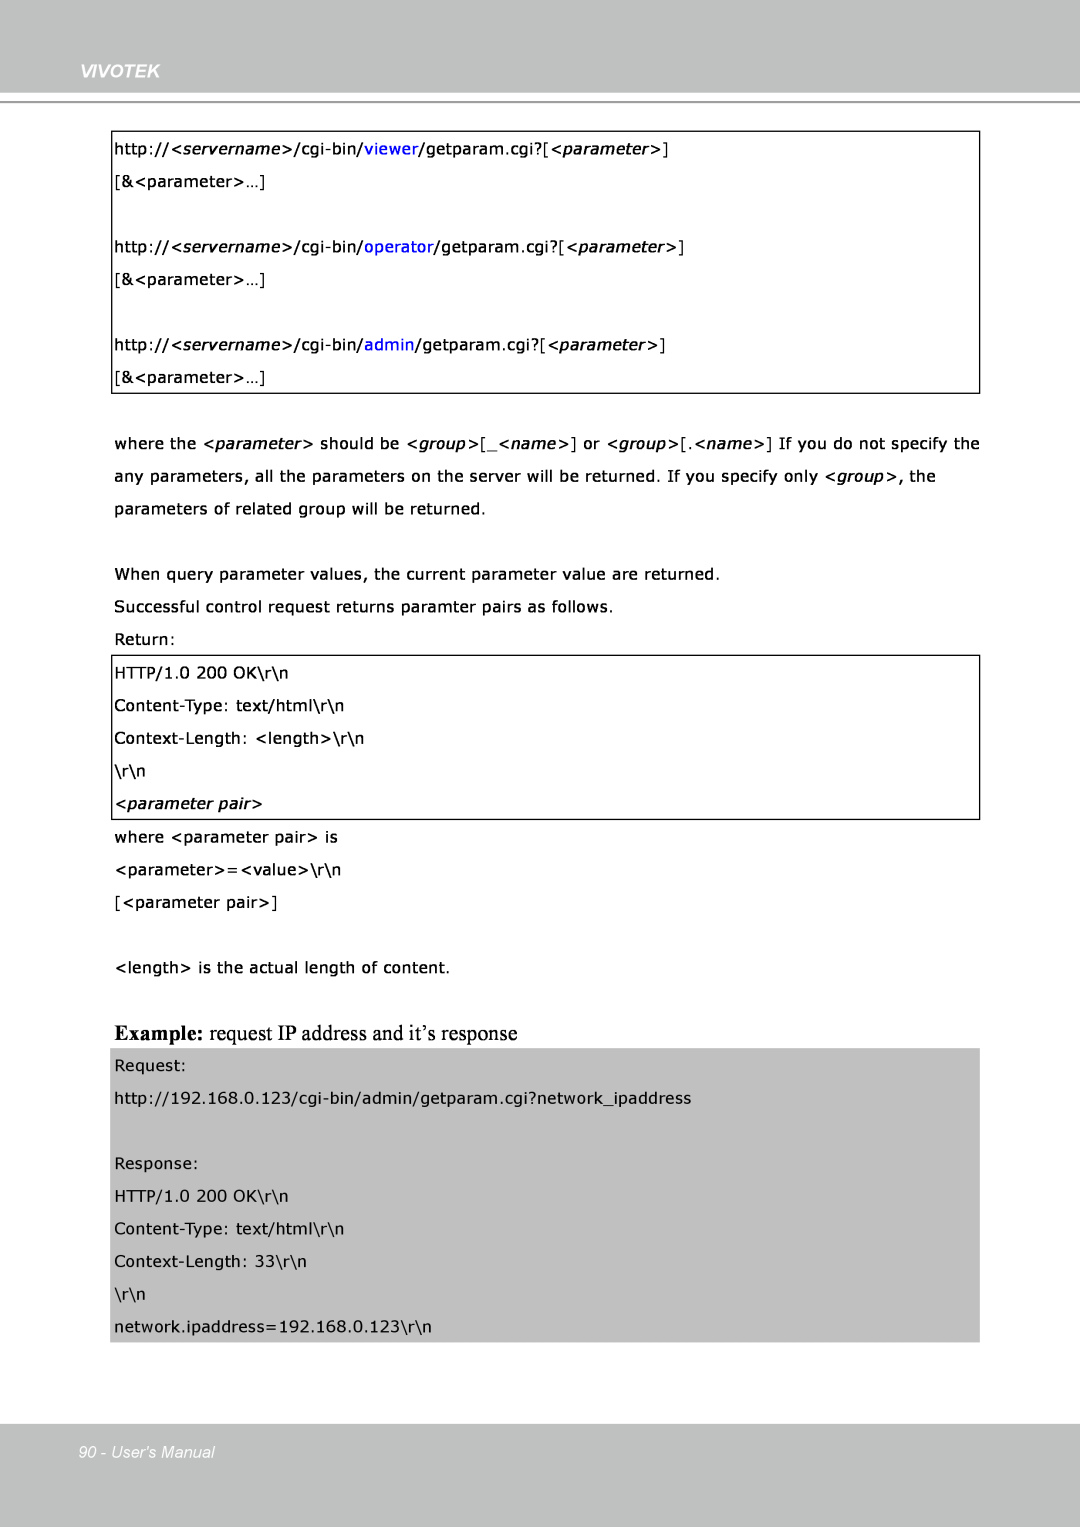 Vivotek PZ7132 manual Example request IP address and it’s response, Vivotek, parameter pair, Users Manual 